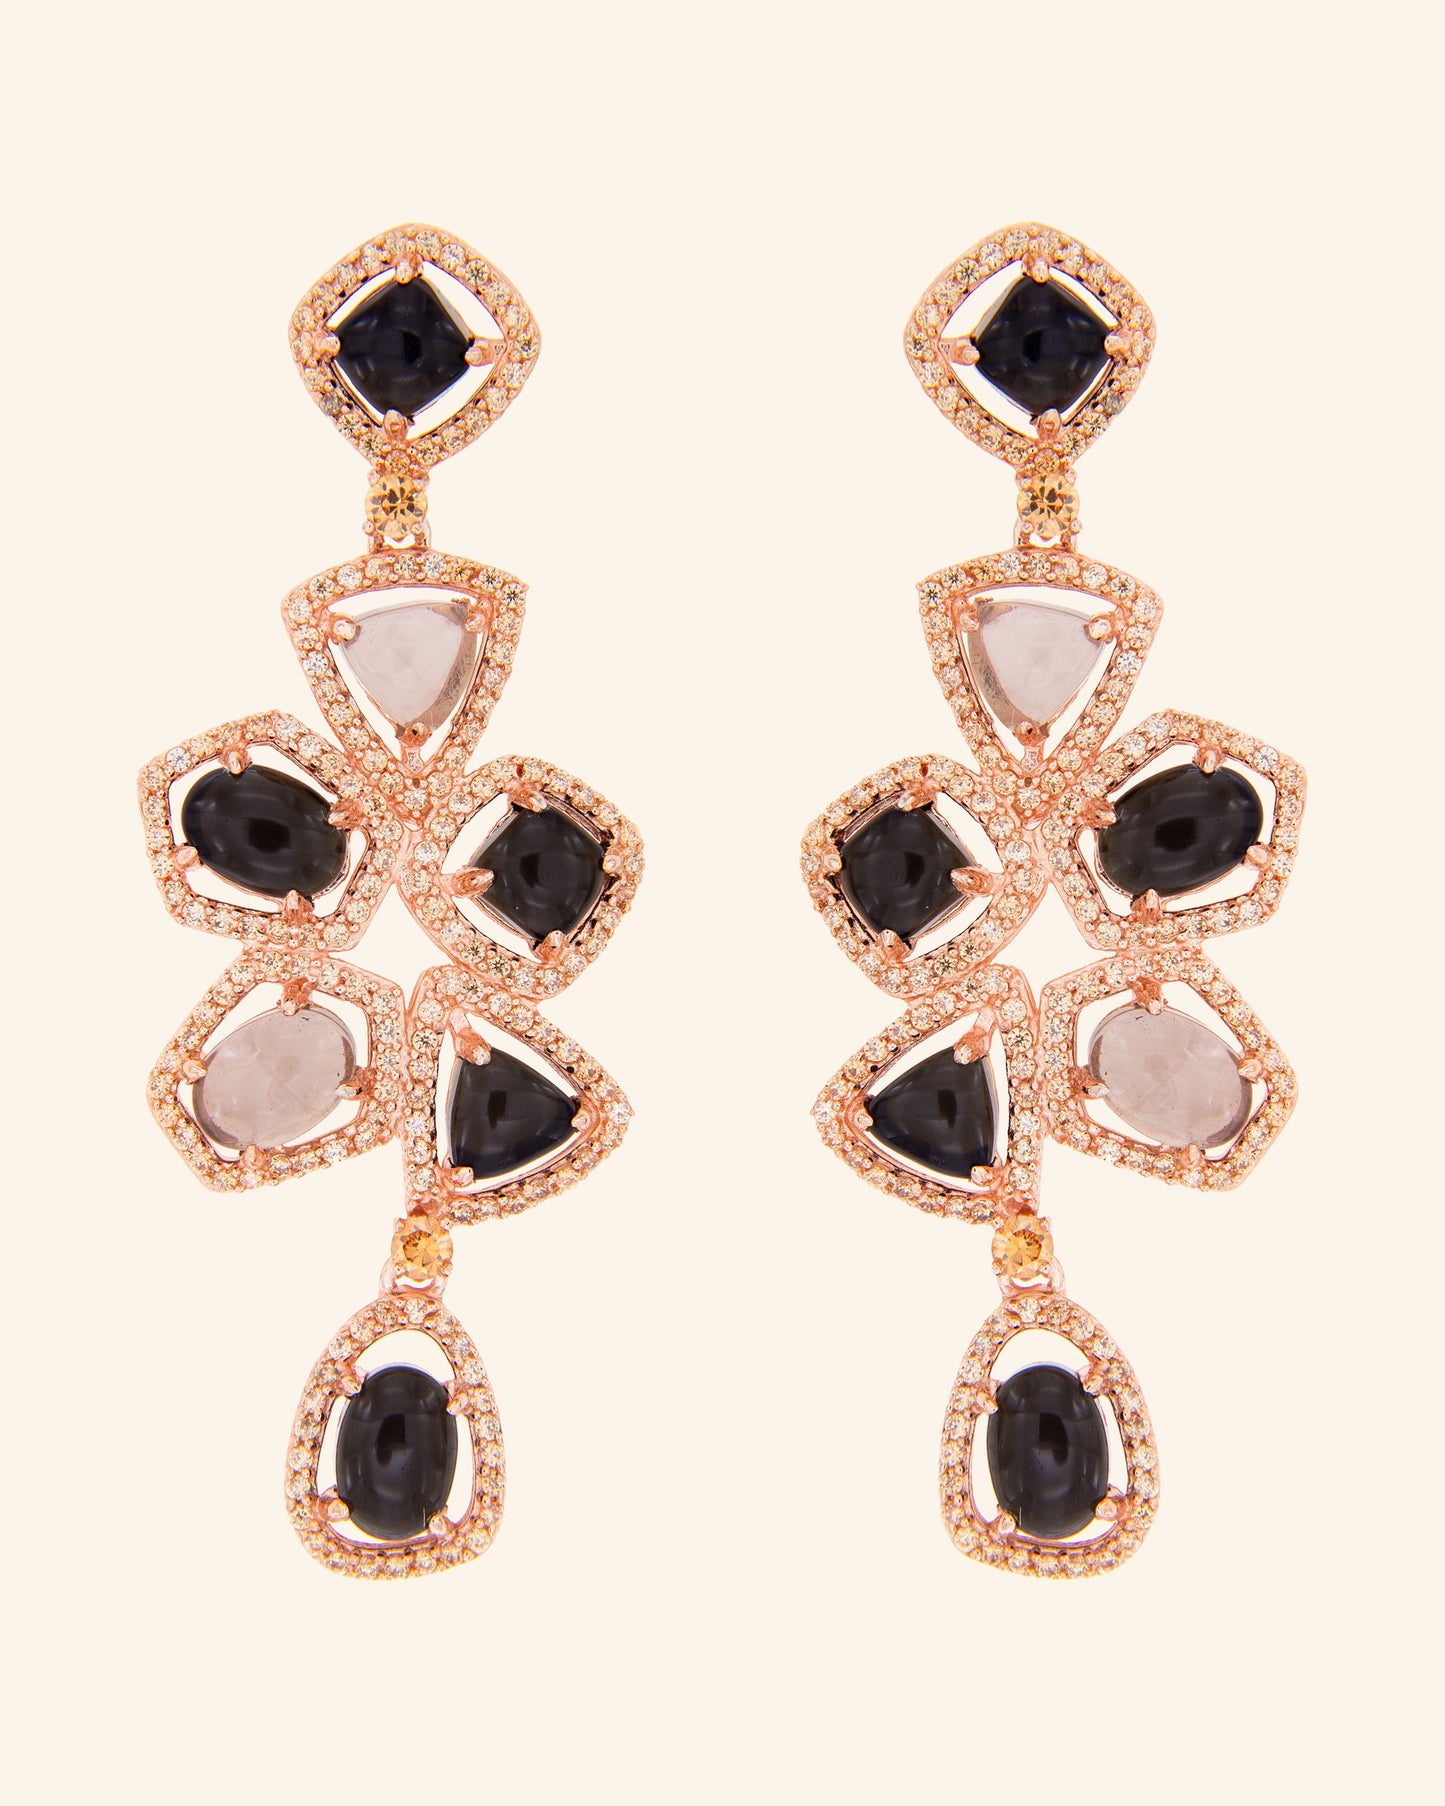 Kara earrings with onyx and smoked quartz